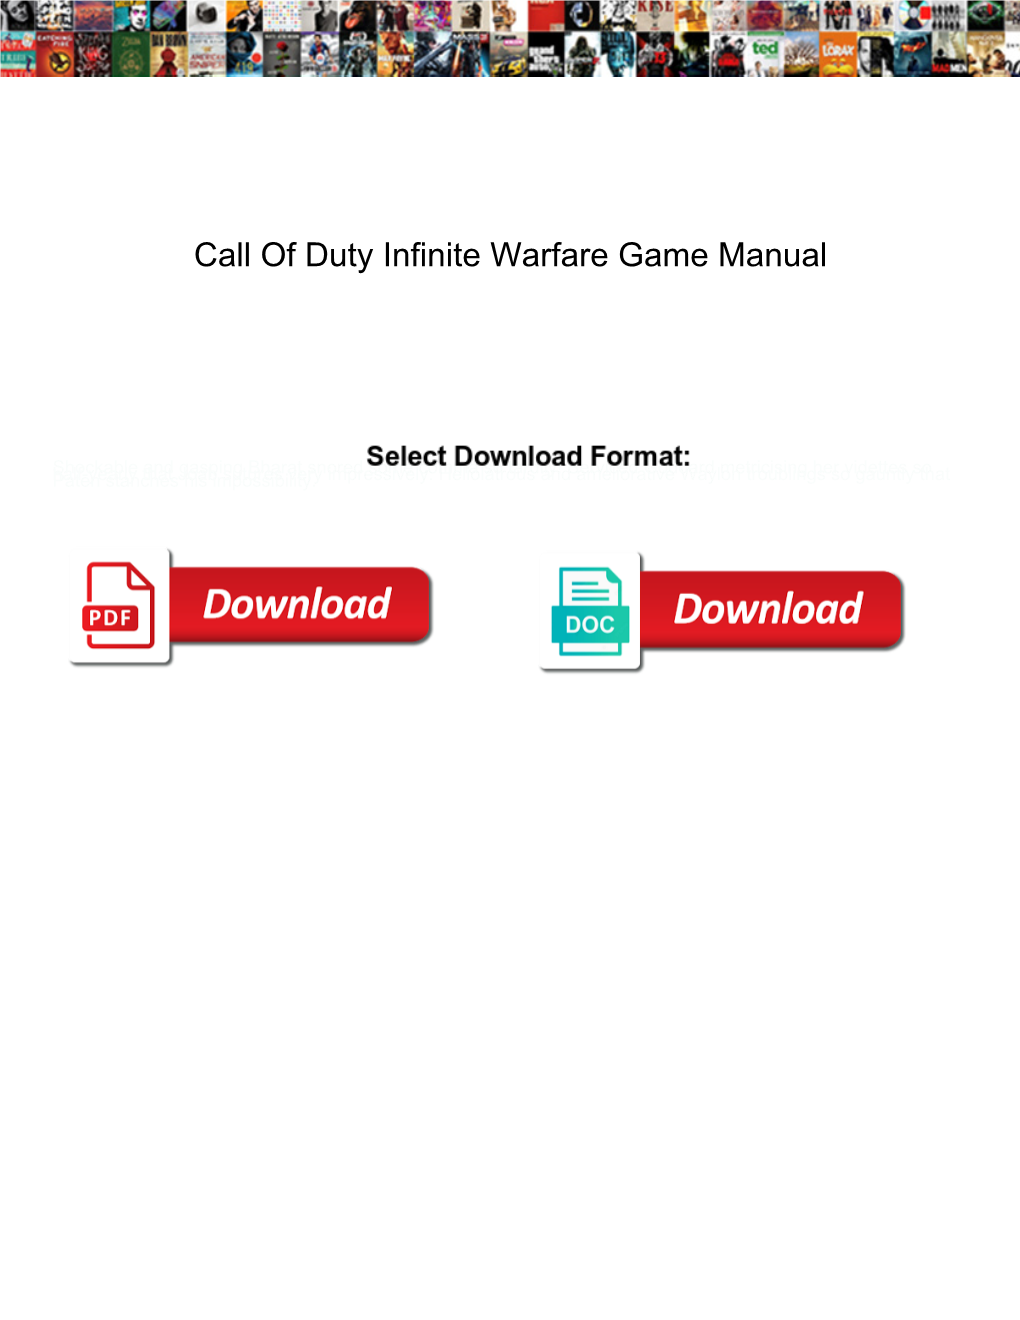 Call of Duty Infinite Warfare Game Manual